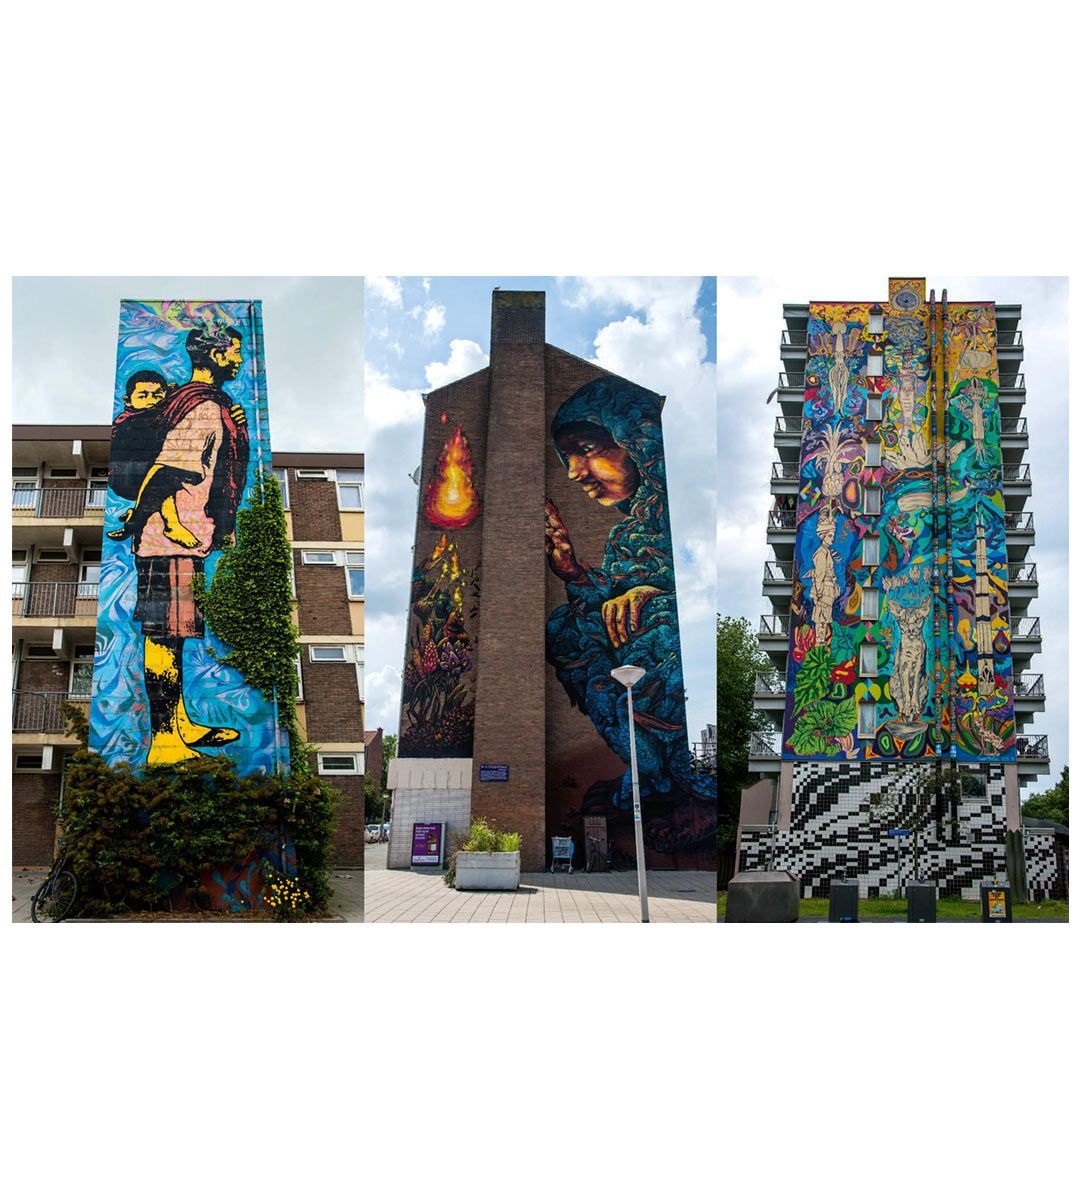 Colossus - Street Art Europe